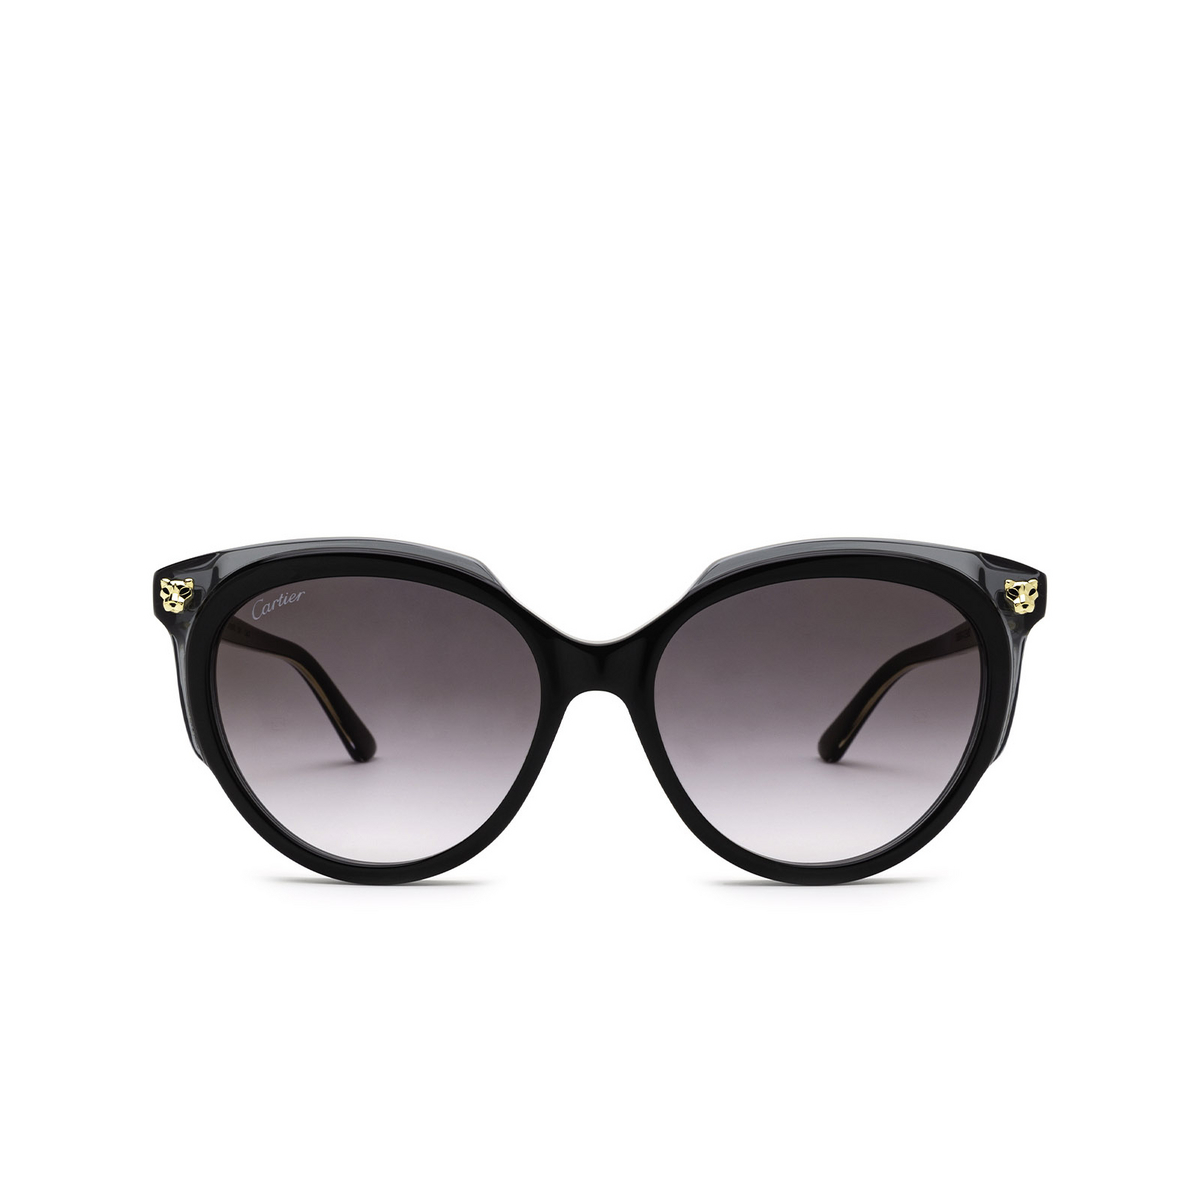 Cartier® Cat-eye Sunglasses: CT0197S color Black 001 - front view.